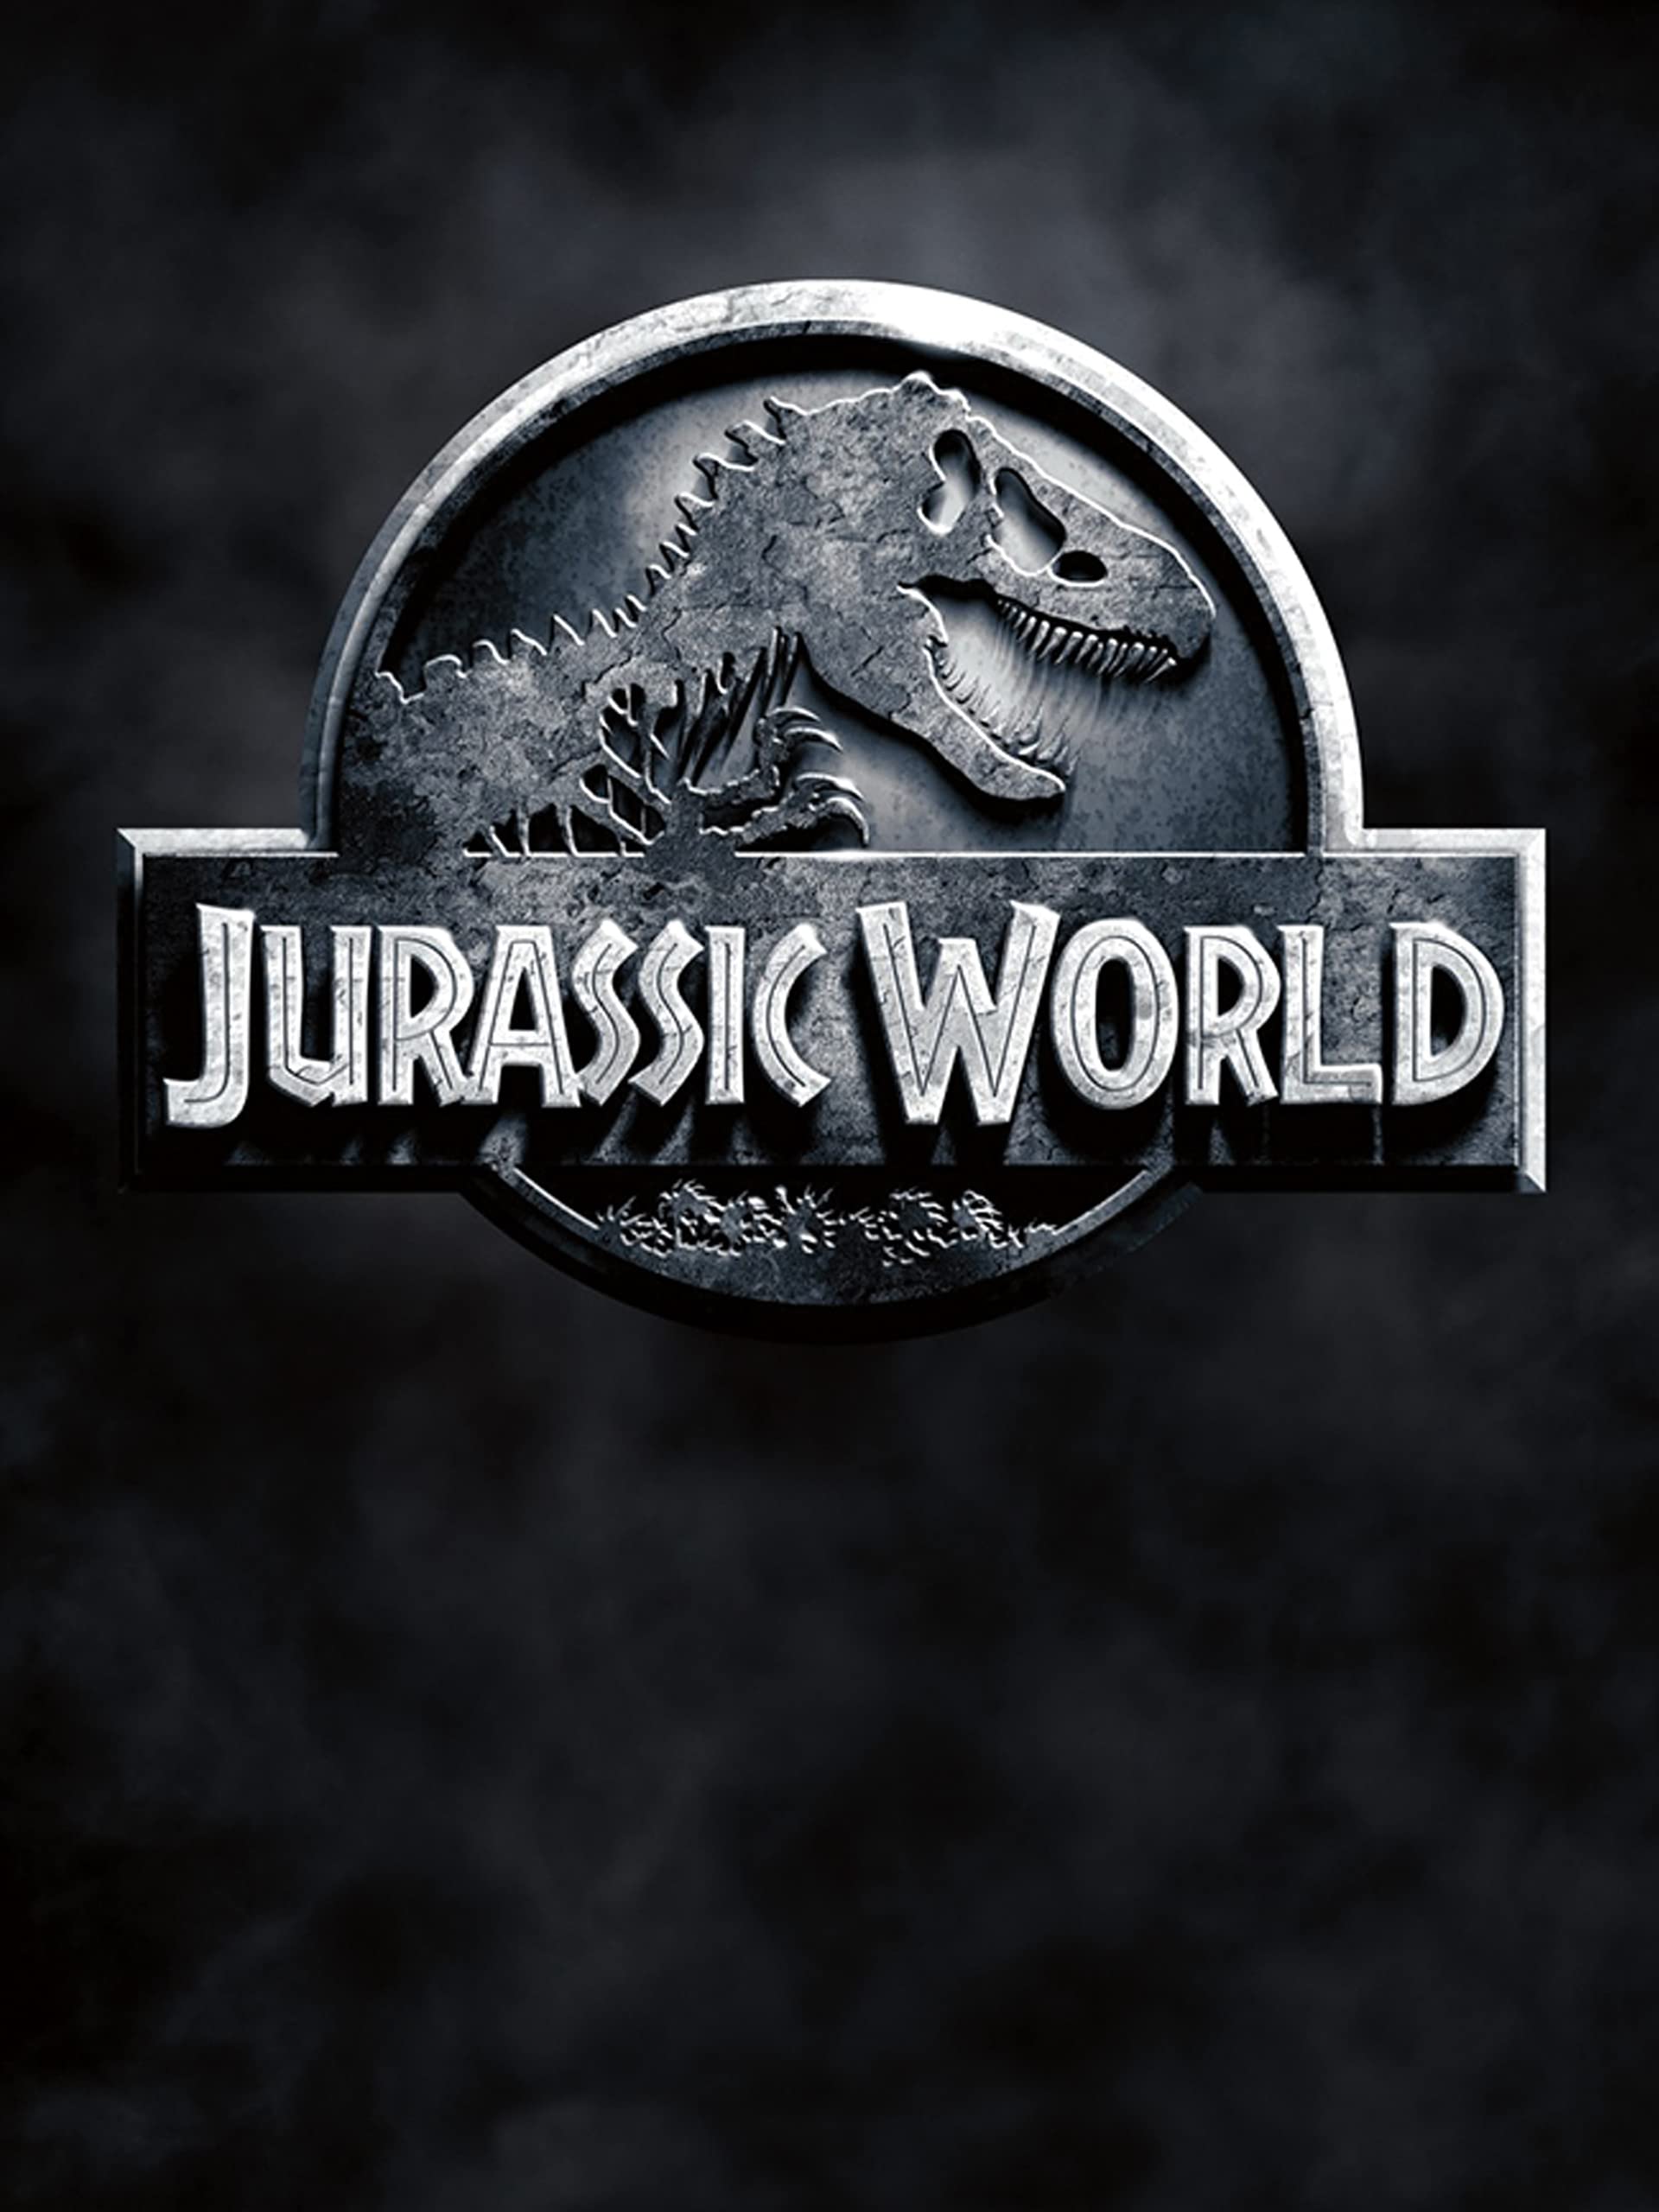 Jurassic World 4K UHD digital film and others $4.99 on Amazon Prime